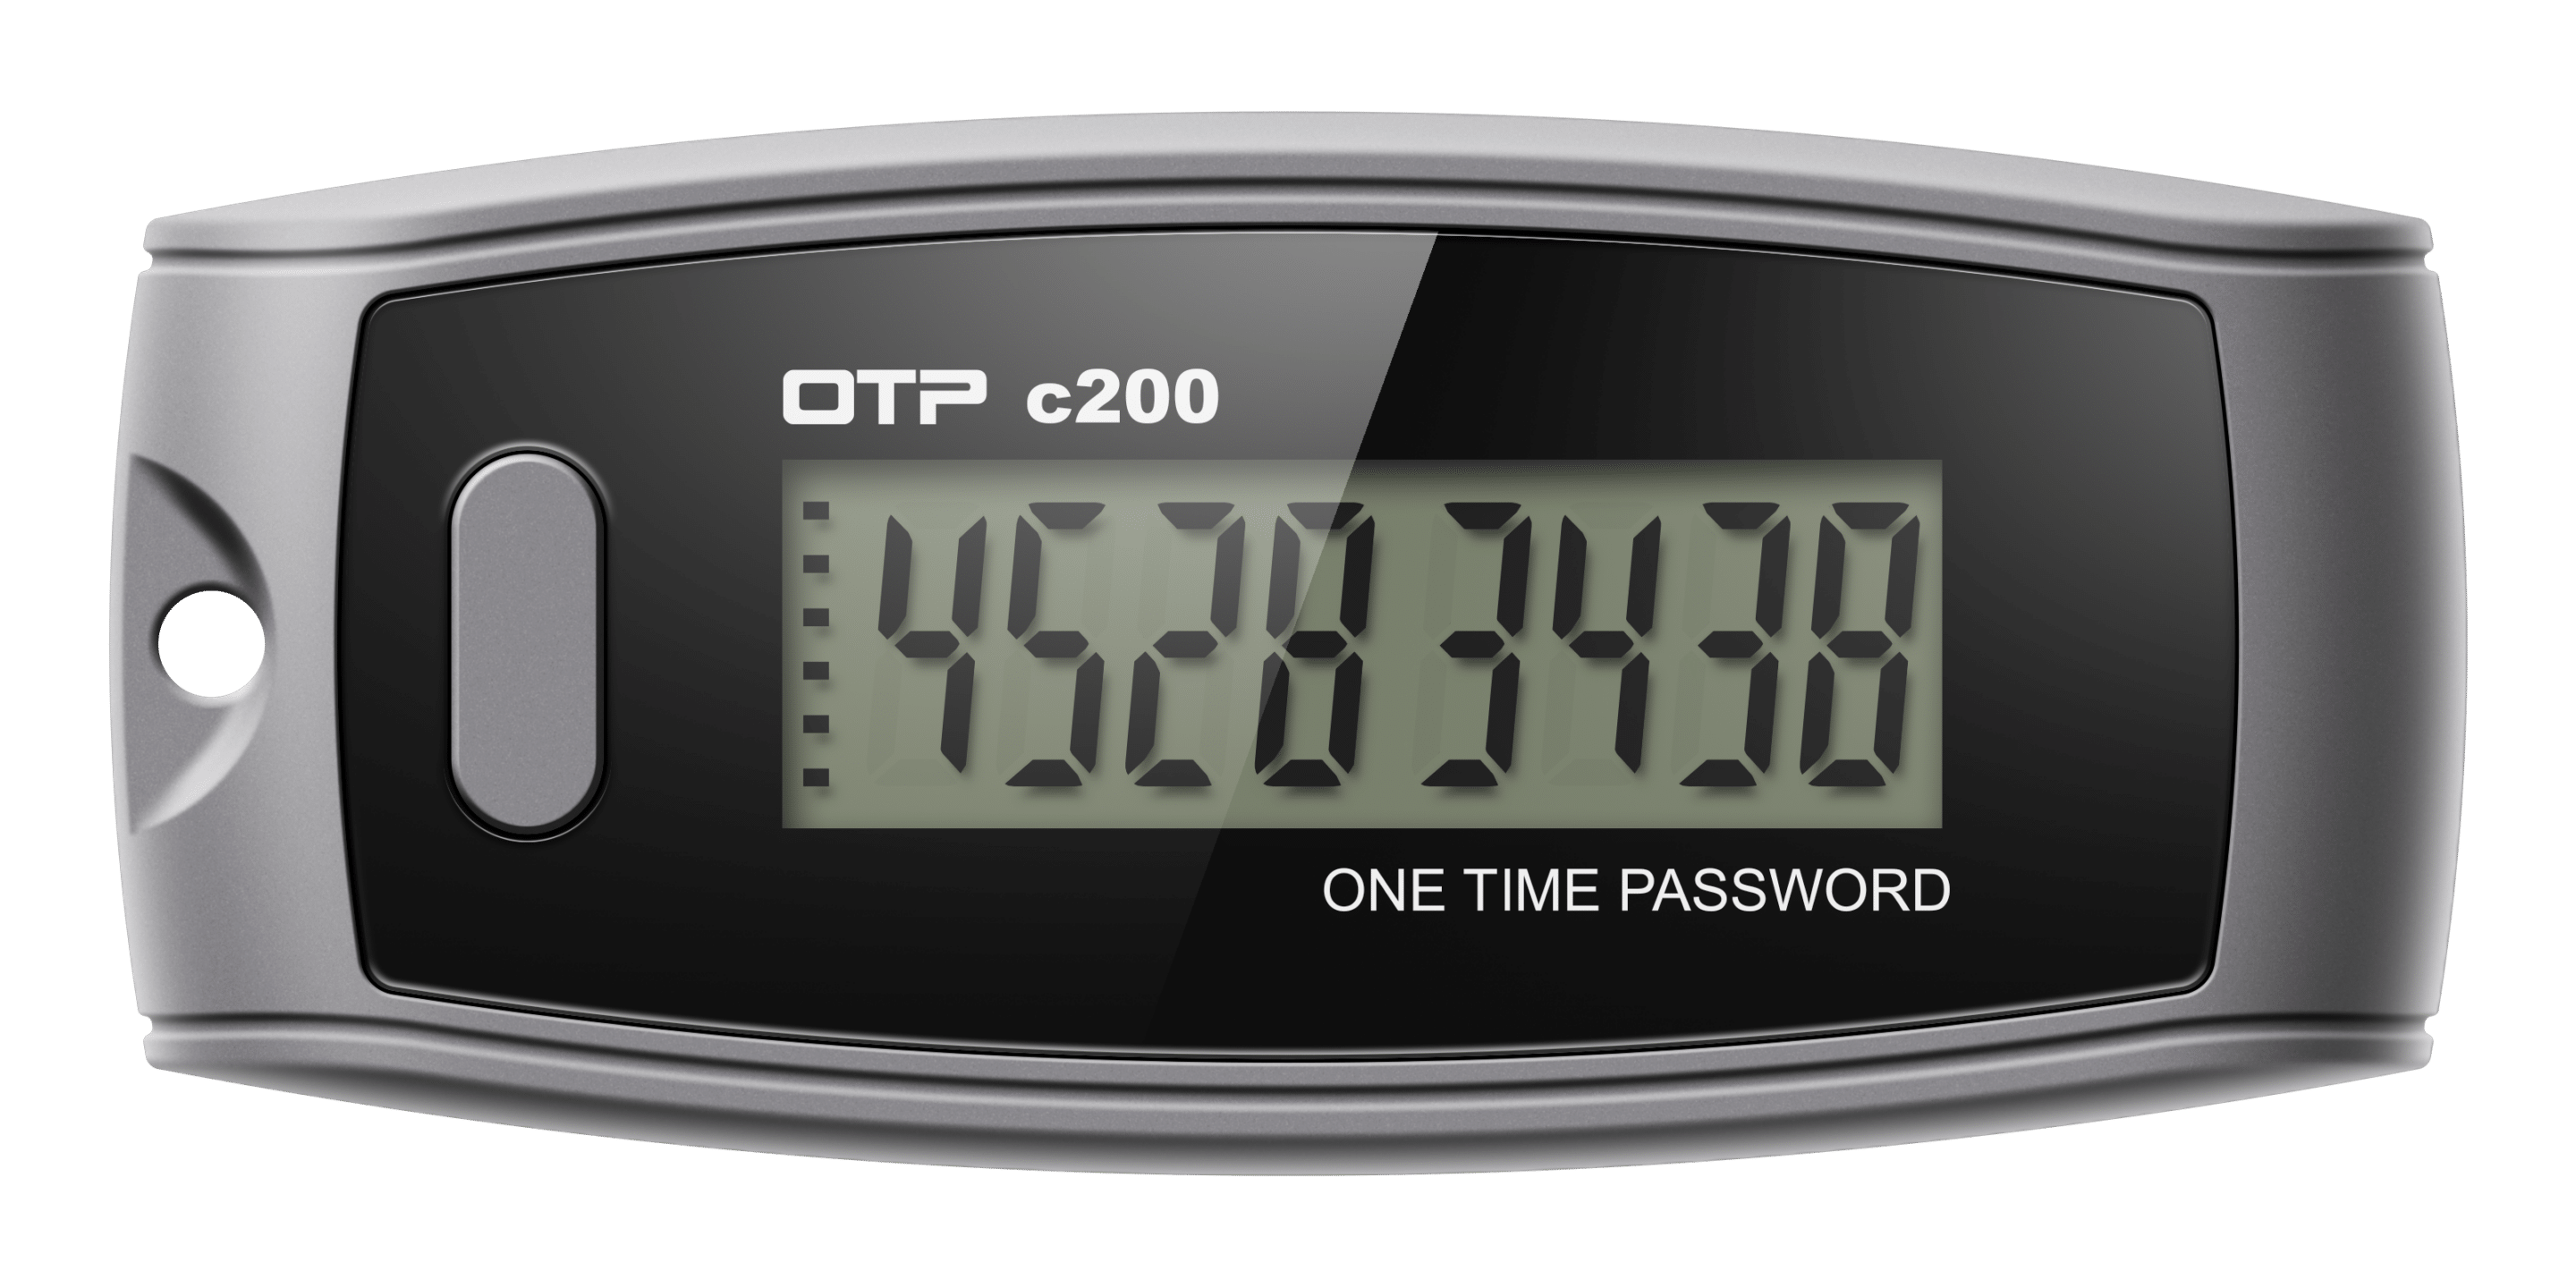 First timers. OTP c200. Feitian c200. Генератор одноразовых паролей. OTP токен.